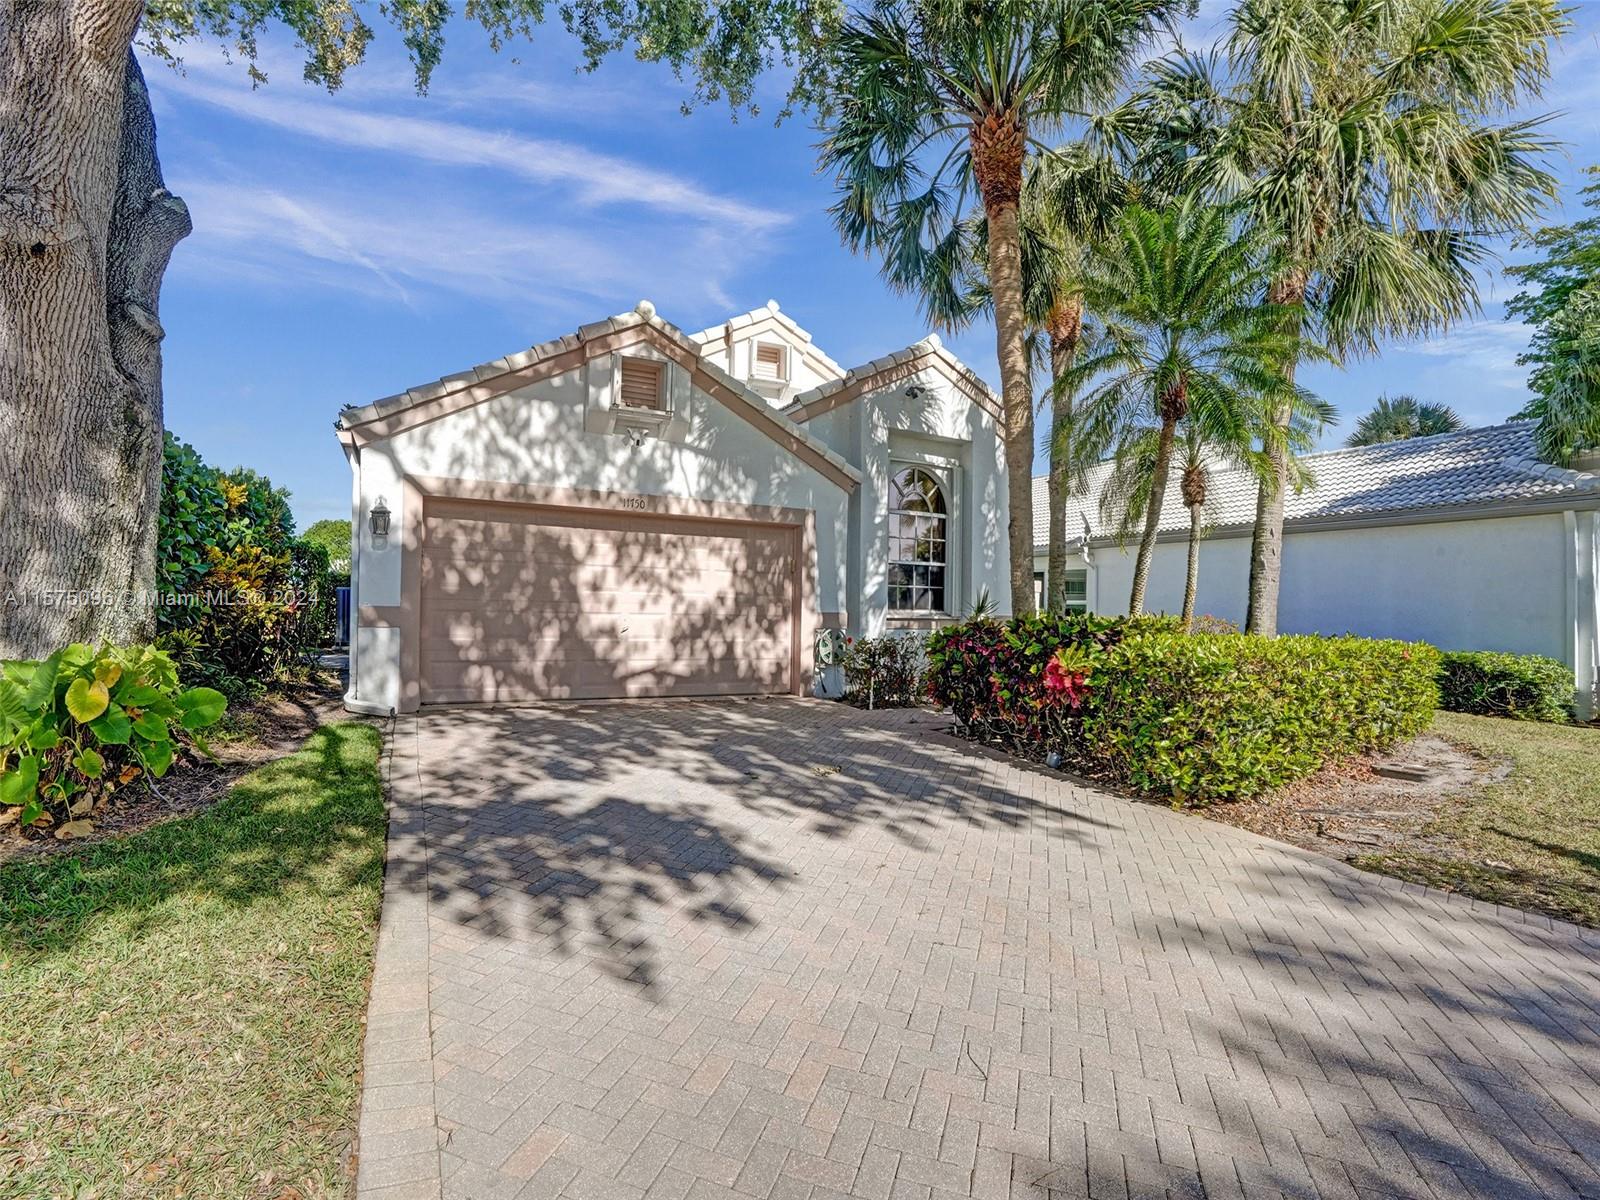 Property for Sale at 11750 Ripple Rd, Boynton Beach, Palm Beach County, Florida - Bedrooms: 3 
Bathrooms: 2  - $535,000